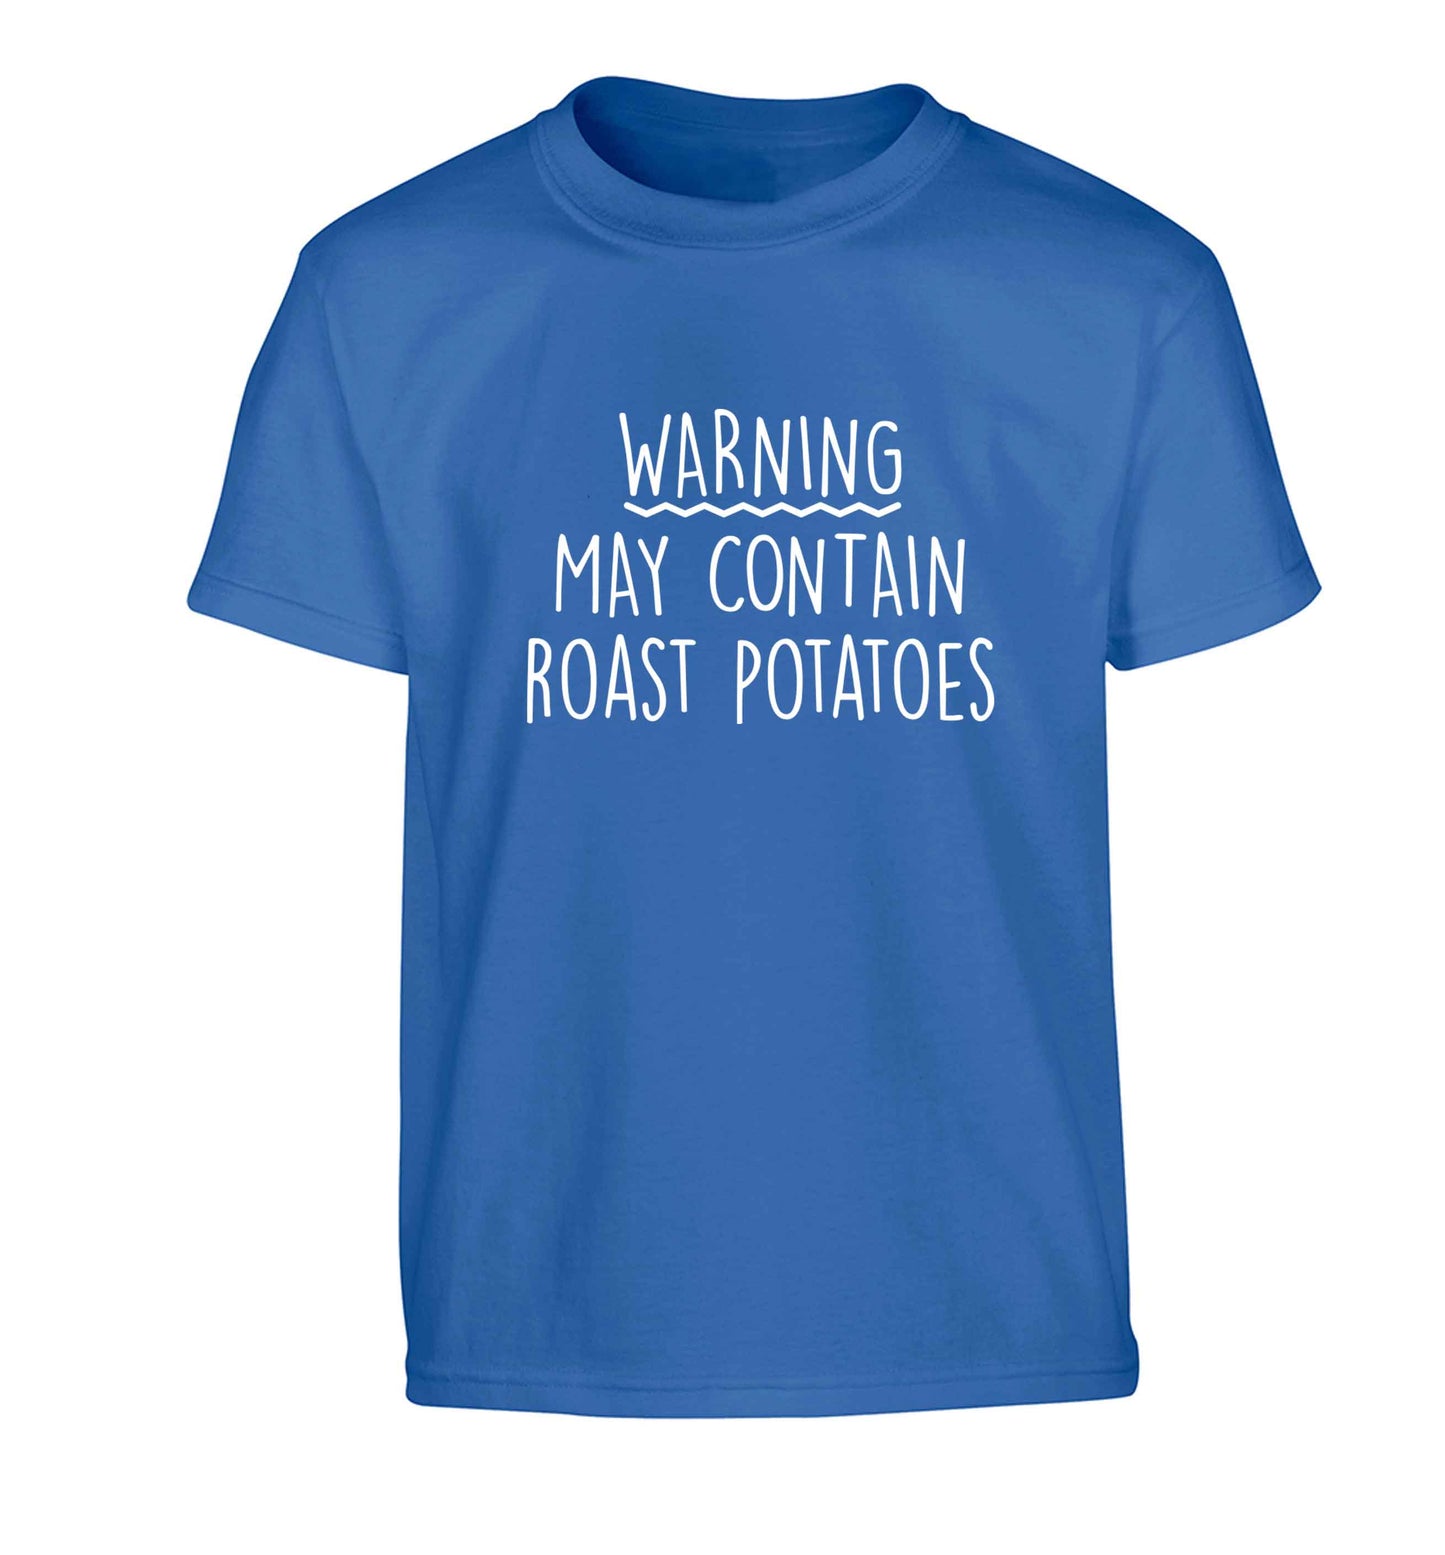 Warning may containg roast potatoes Children's blue Tshirt 12-13 Years